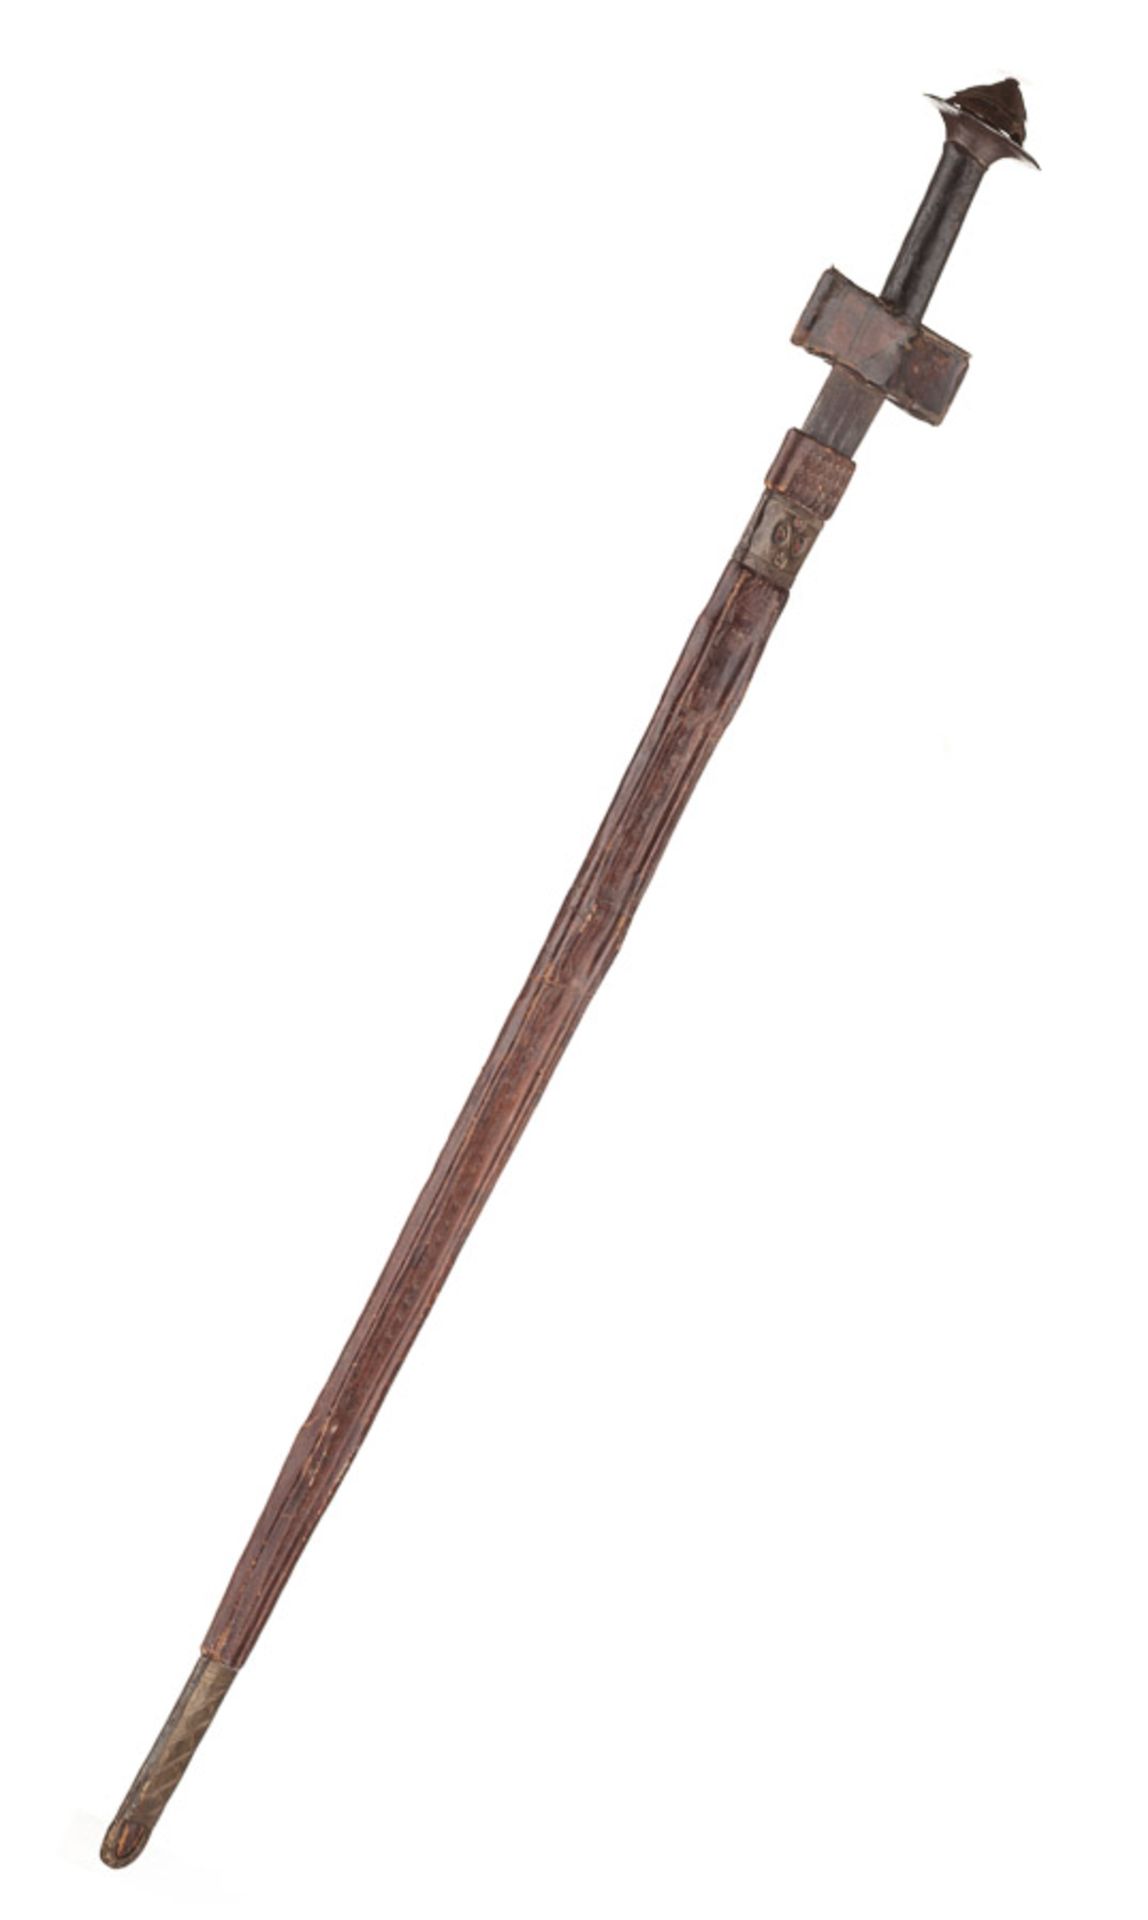 Nordafrika Tuareg-Schwert um 1900 / North Africa Tuareg-sword about 1900ca. 76 cm lange Klinge mit